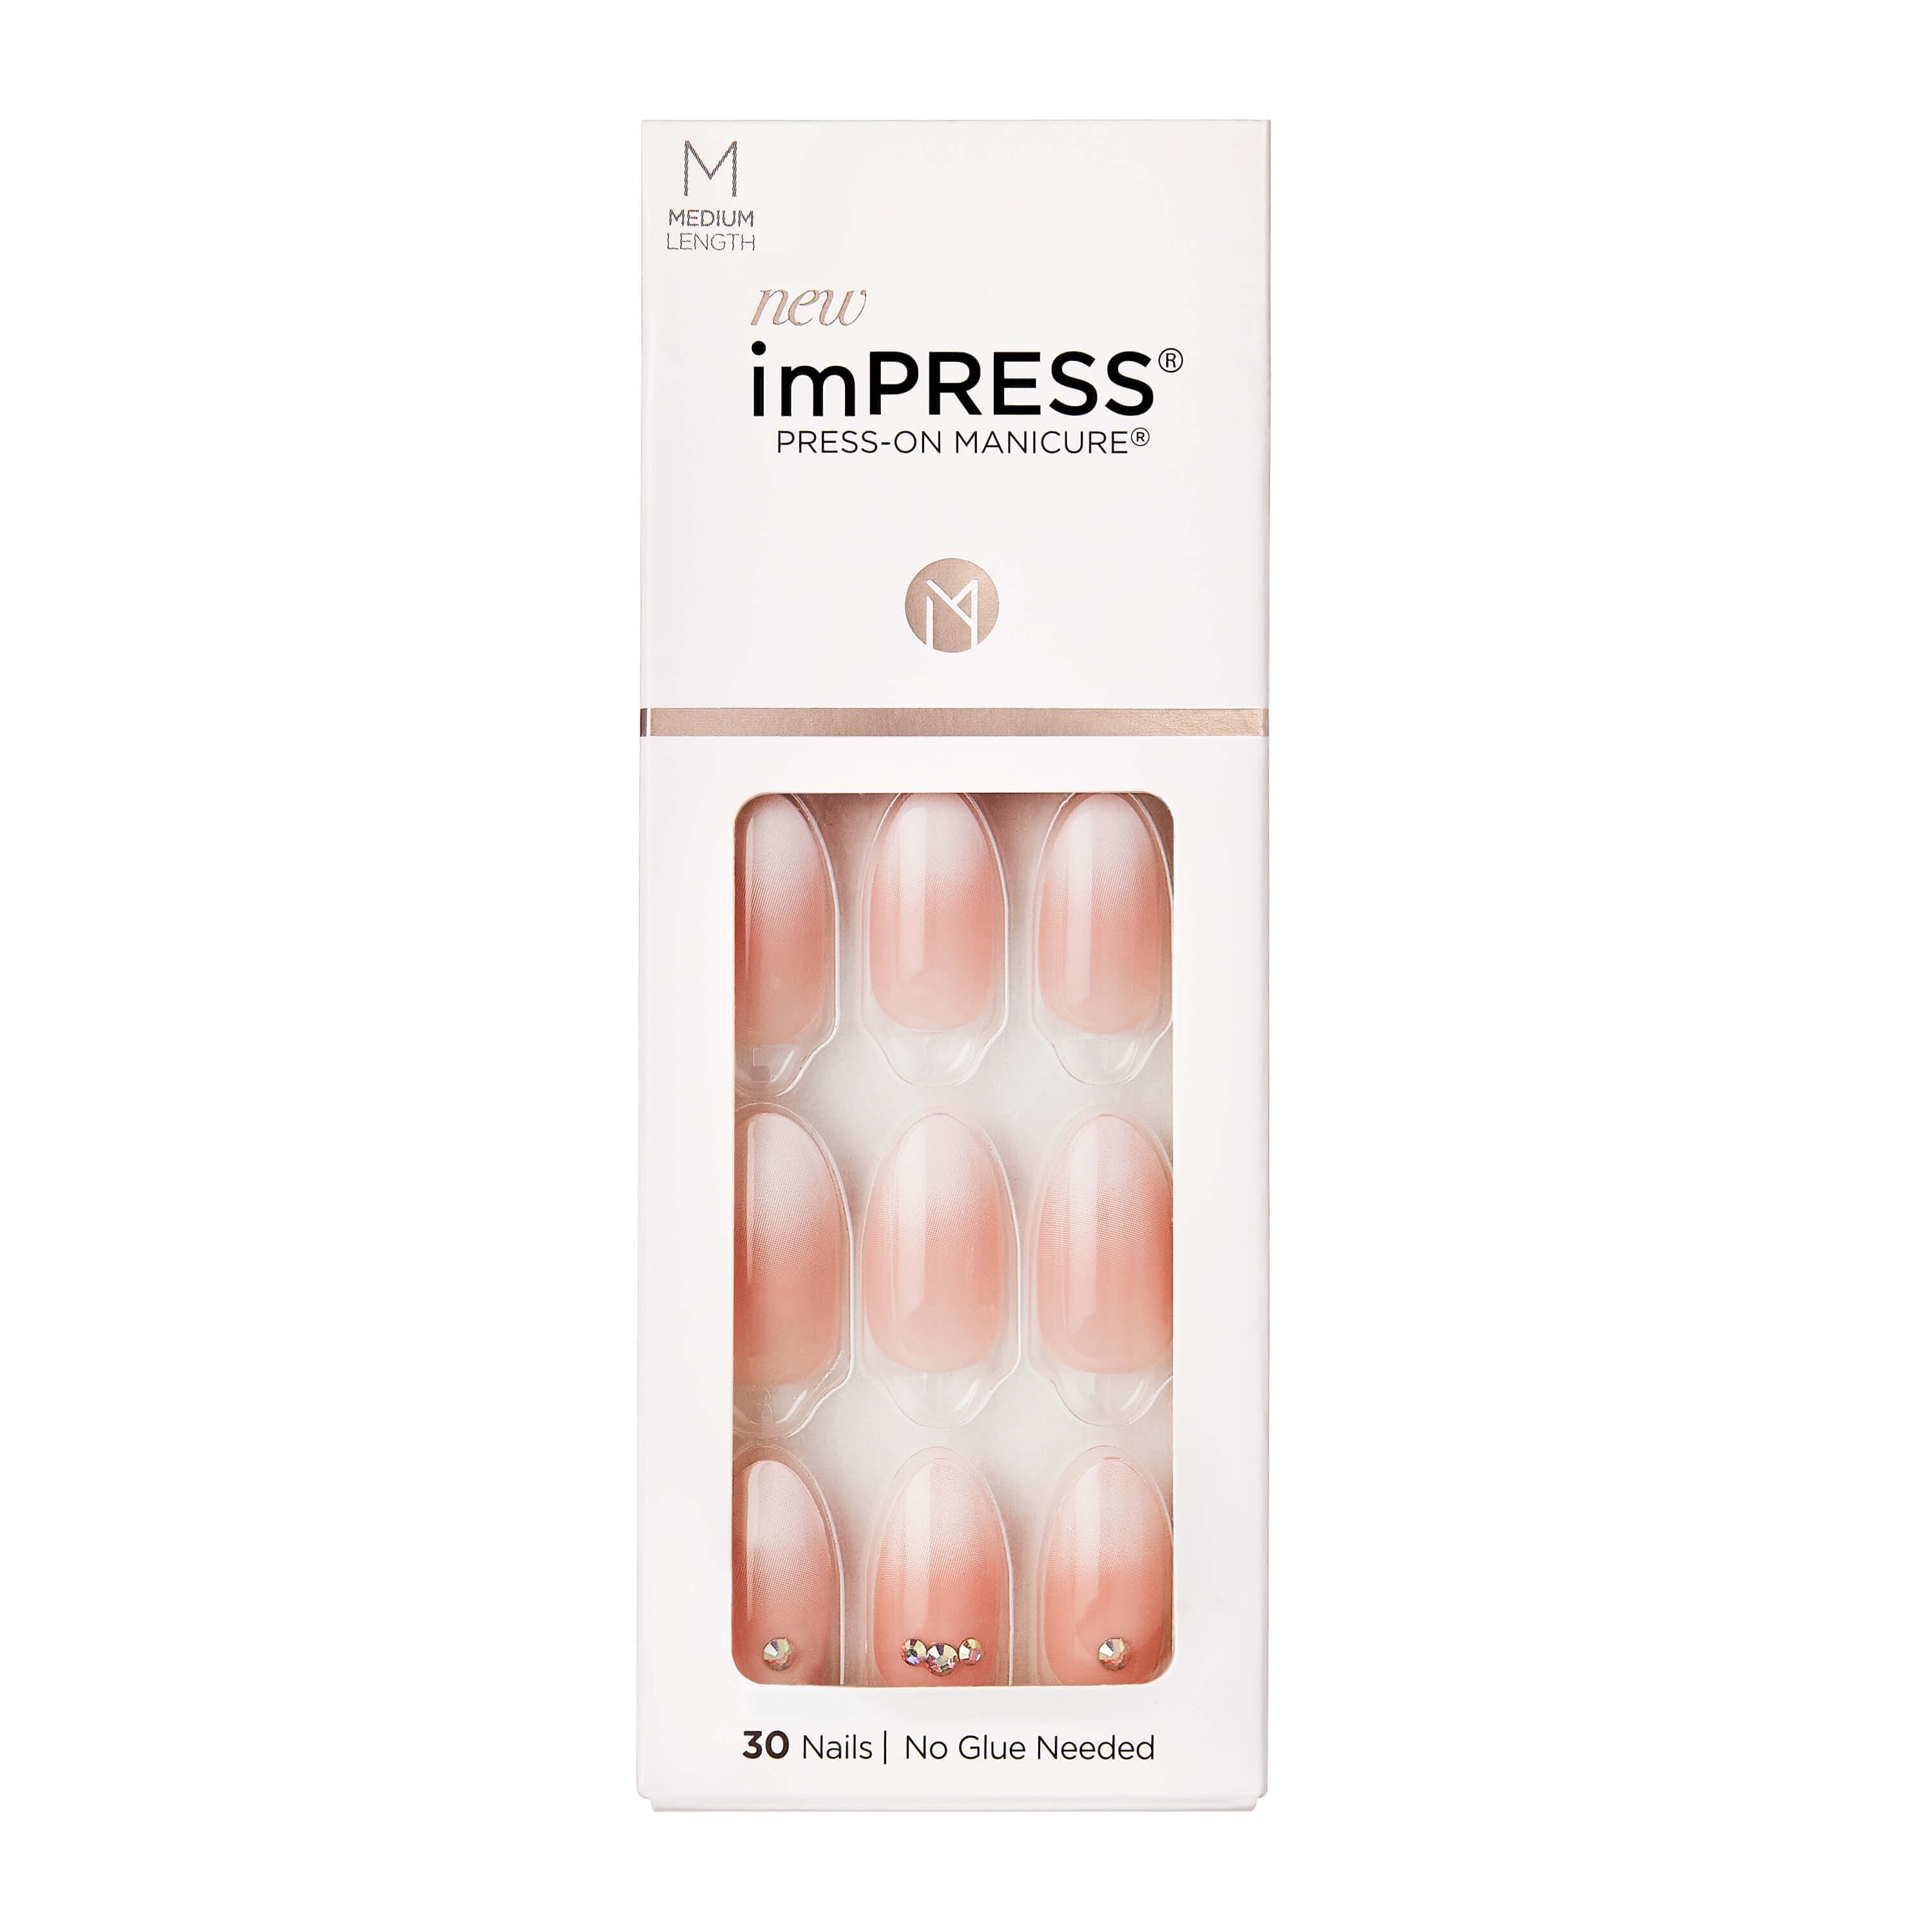 imPRESS Press-on Manicure - Awestruck, Medium - Walmart.com